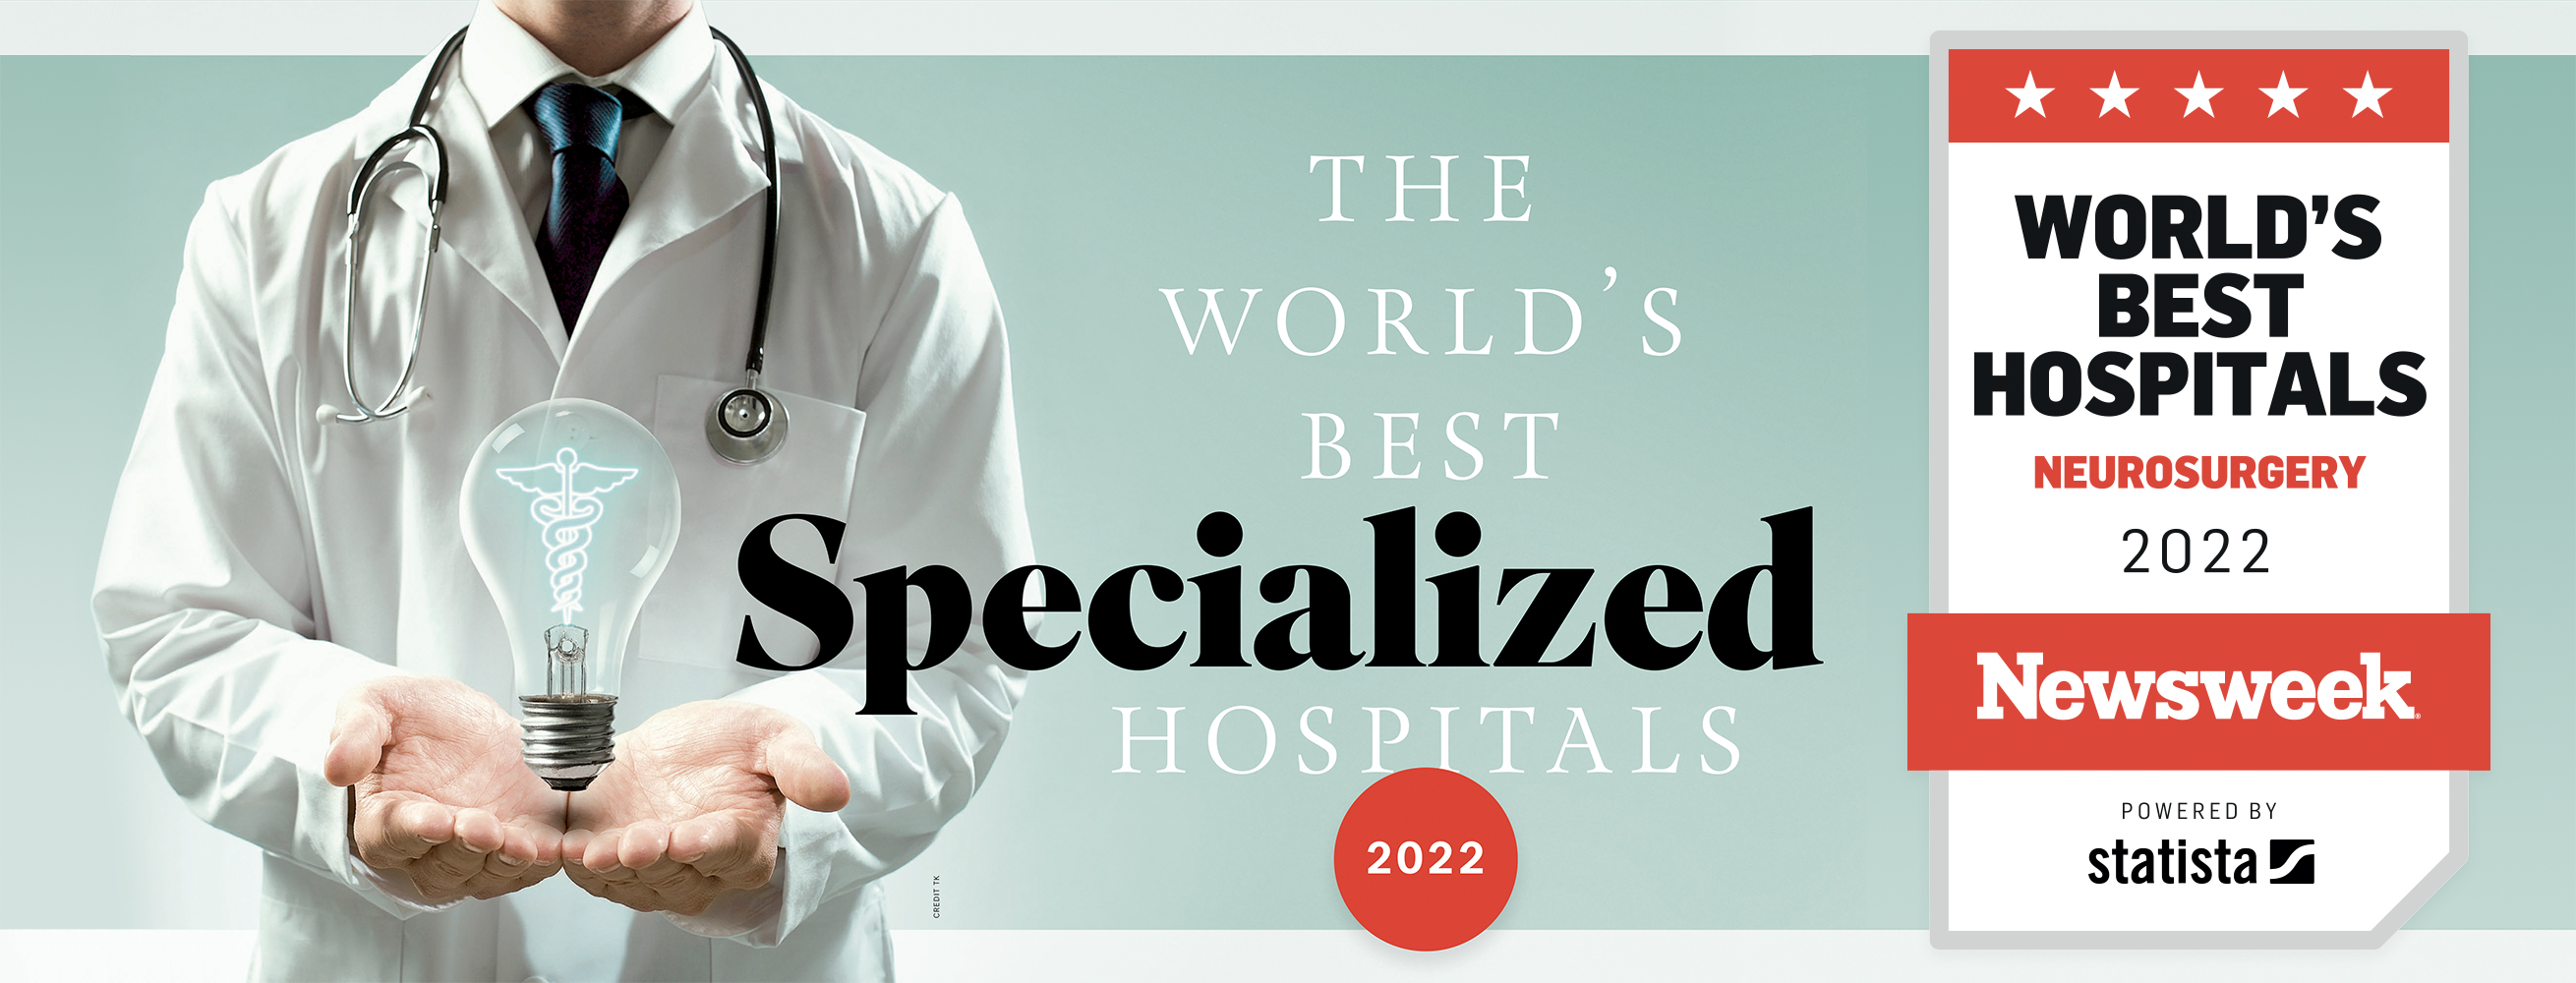 Best Specialized Hospitals 2022 Neurosurgery